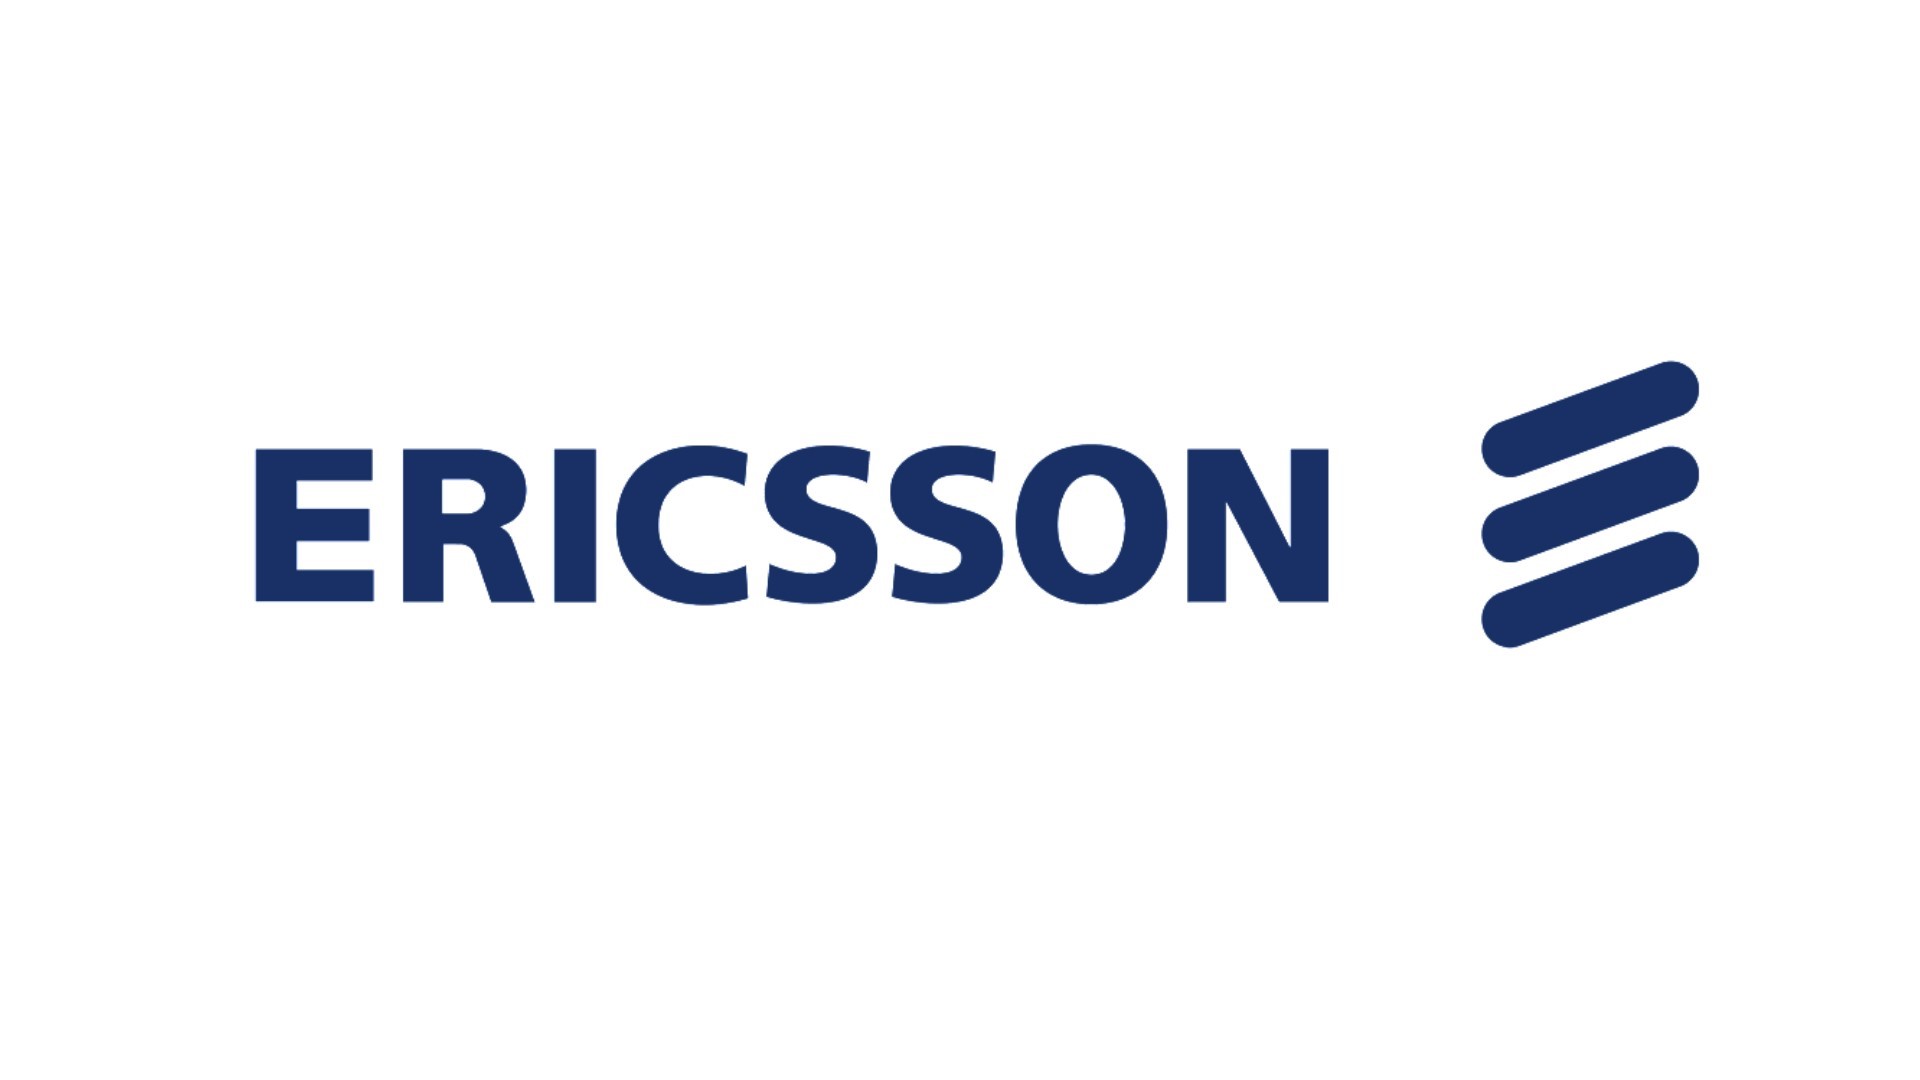 Ericsson ชี้เสี่ยงส่วนแบ่งการตลาดลด เหตุโทรคมฯ สวีเดนแบน Huawei อาจกระทบประมูล 5G ในจีน